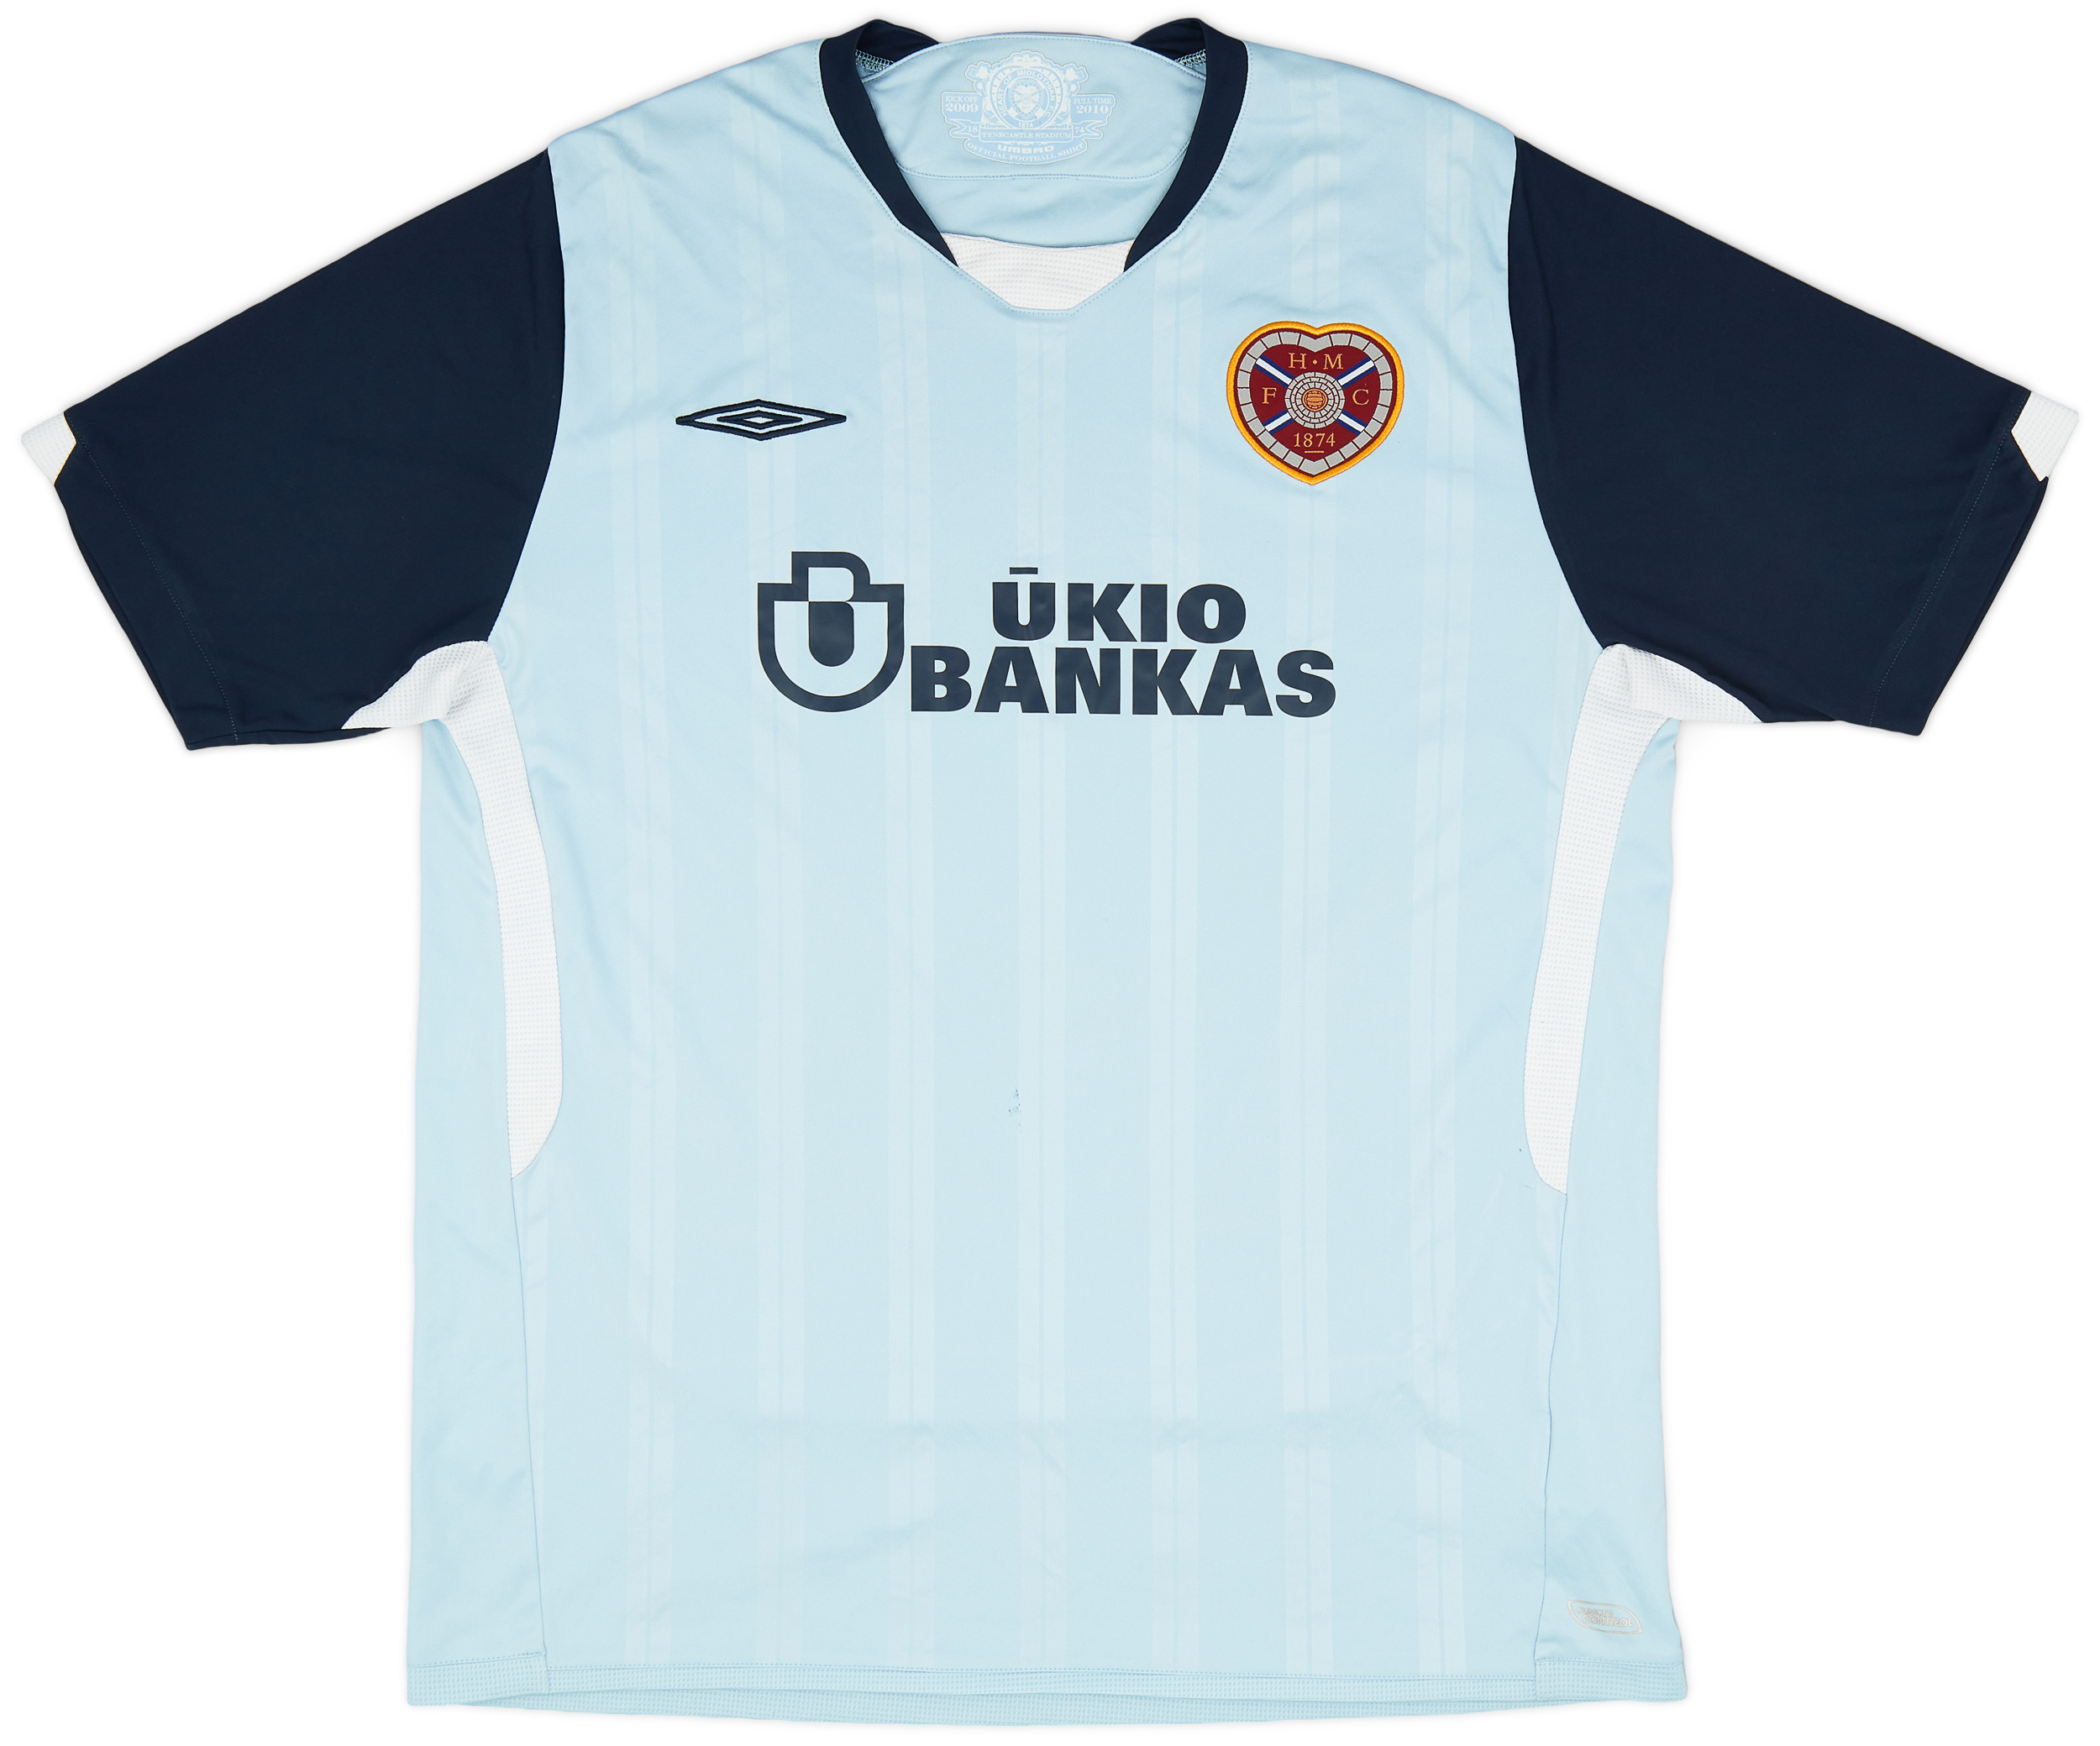 2009-10 Heart Of Midlothian (Hearts) Away Shirt - 8/10 - ()